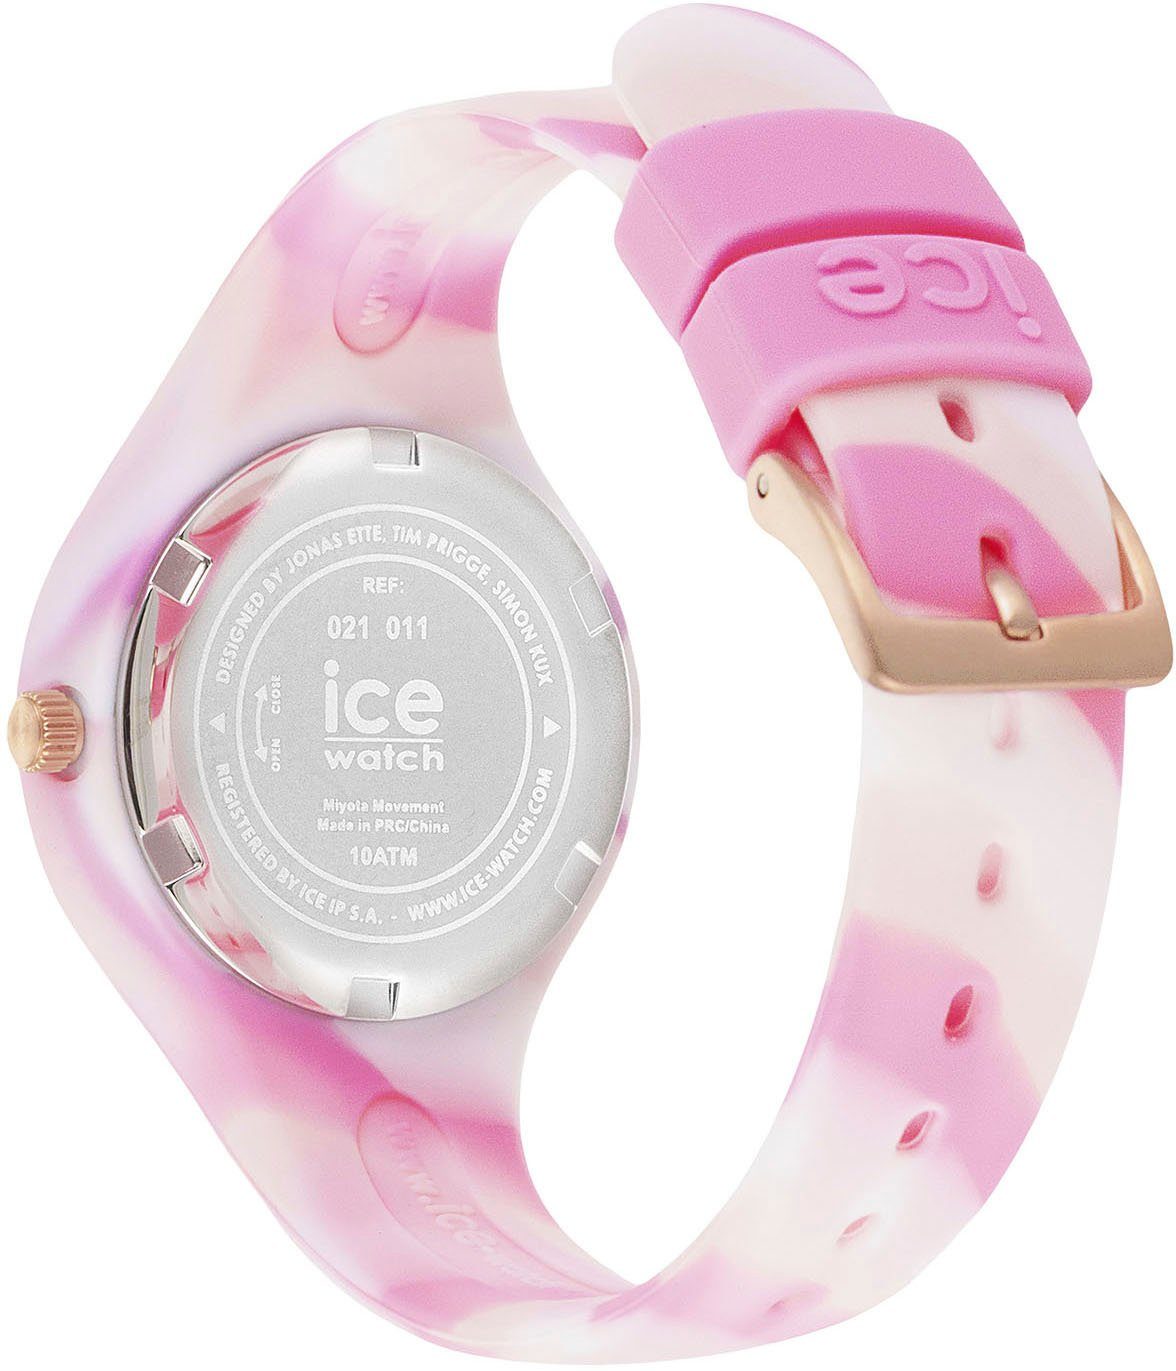 ideal auch ice-watch Geschenk 021011, and ICE Quarzuhr - tie shades Pink als 3H, Extra-Small dye - -